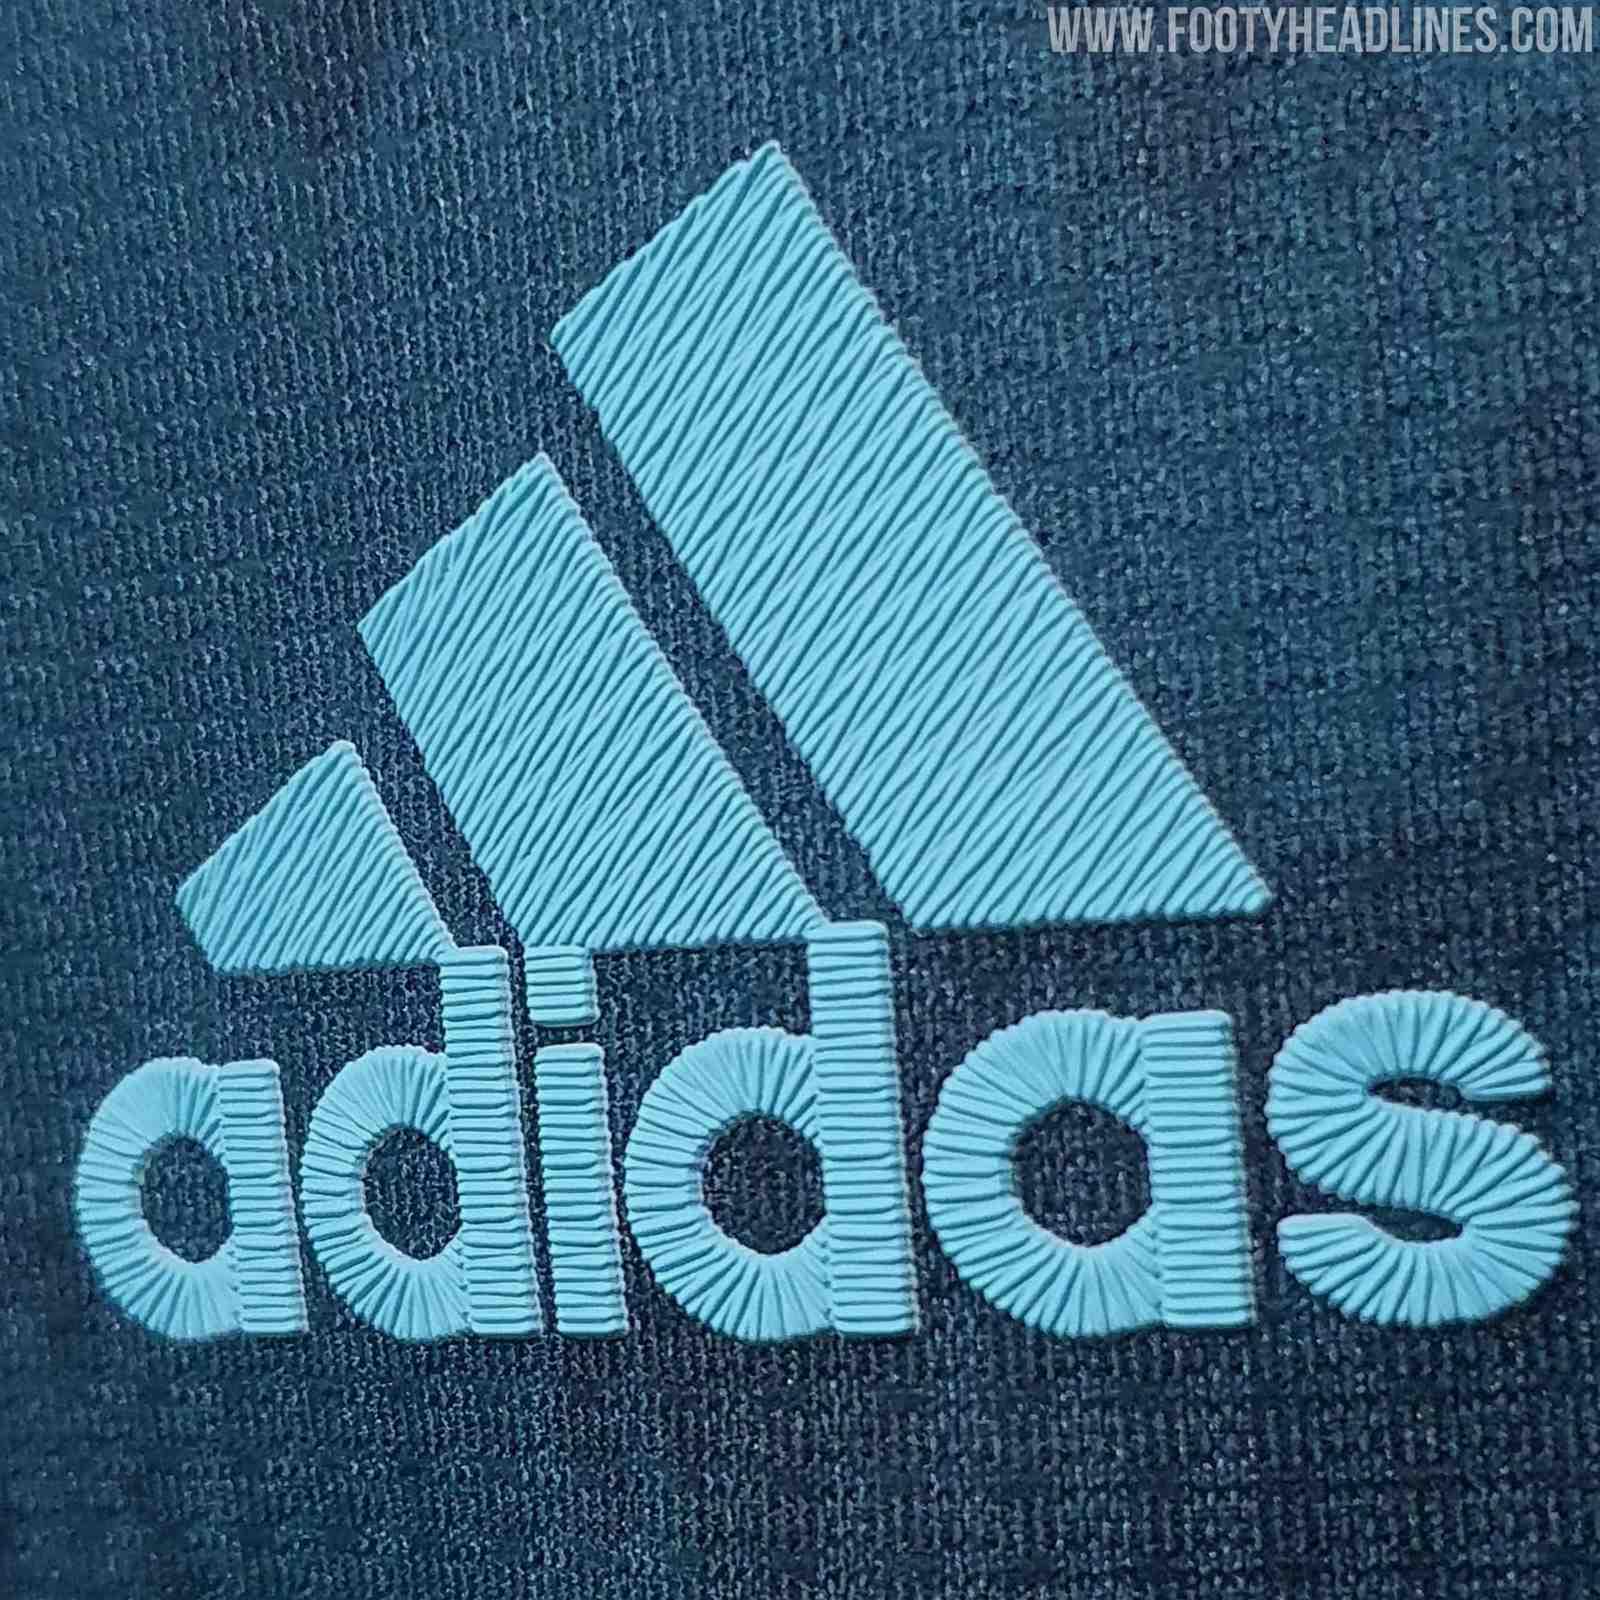 Unbelievable Differences - Adidas 2020 Authentic vs Replica Logo ...